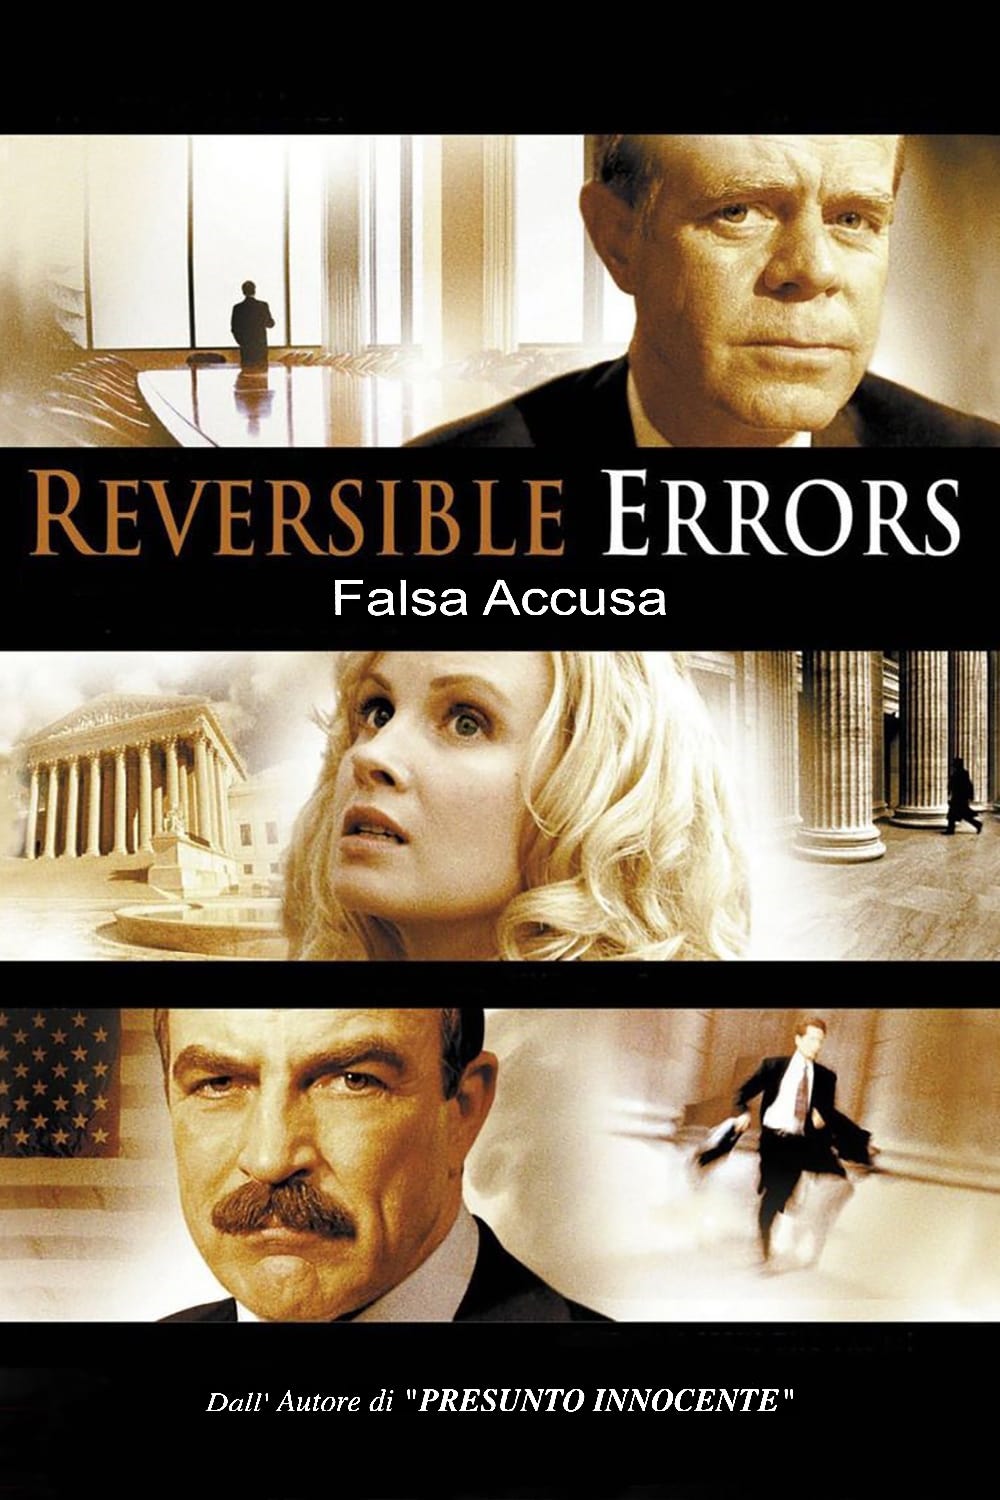 Reversible Errors – Falsa accusa (2004)